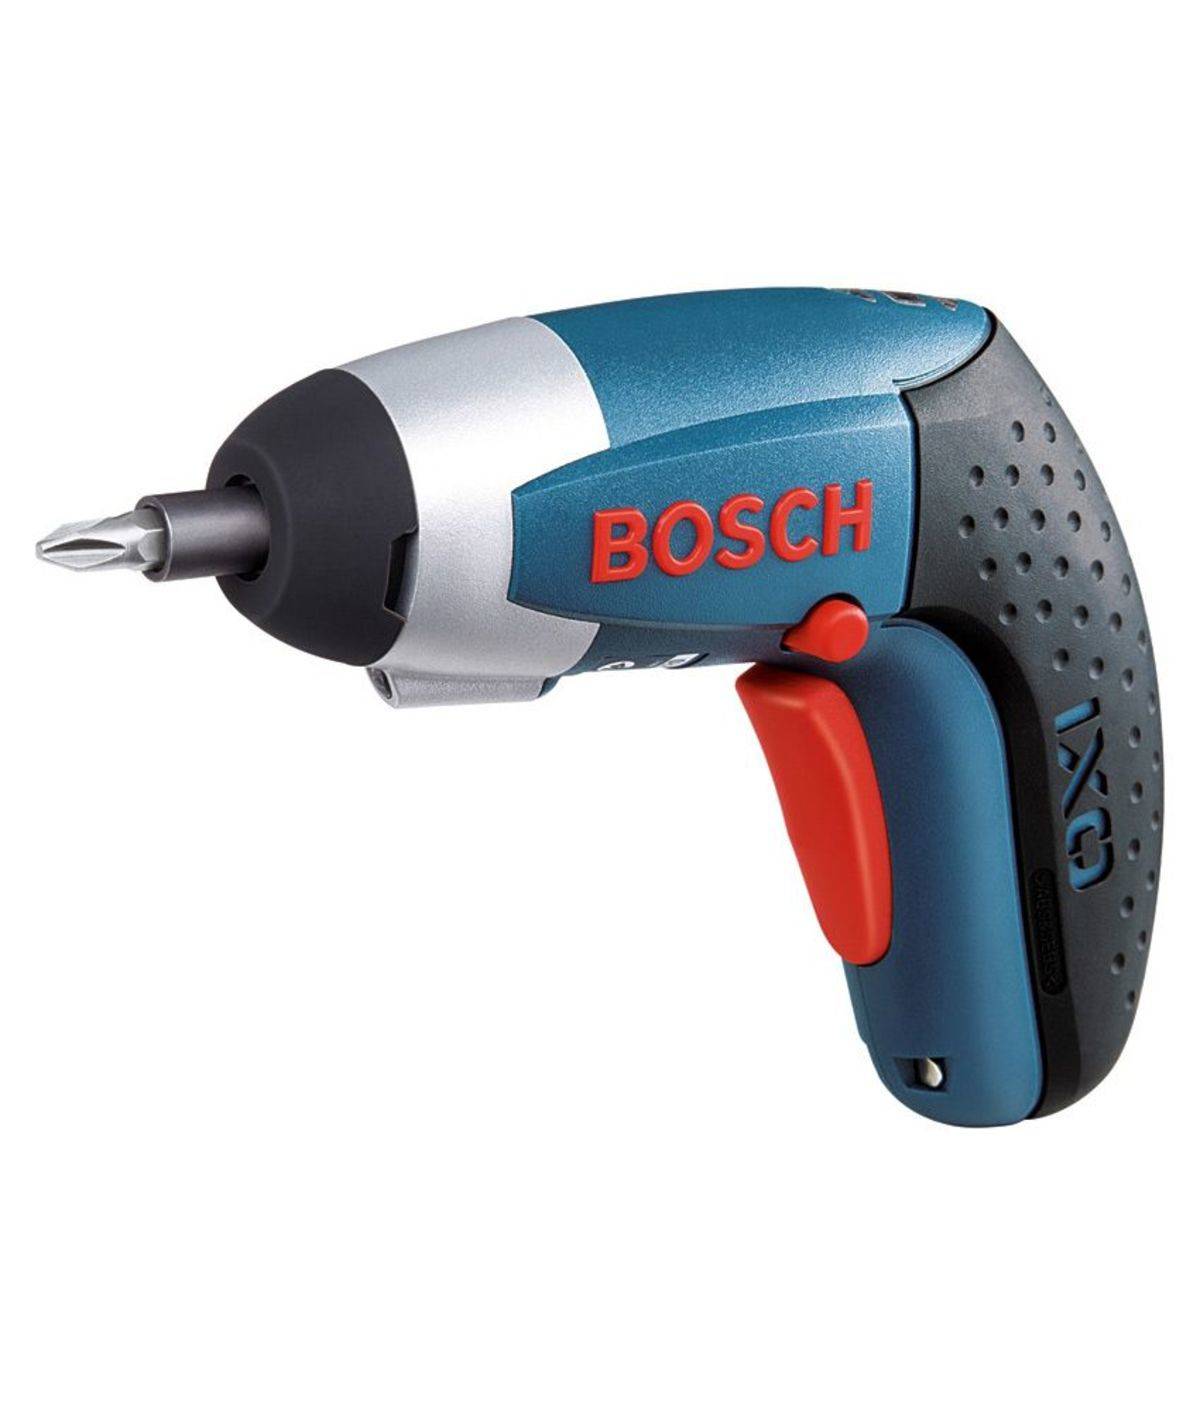 Fremmedgørelse En smule Gøre husarbejde Bosch power tools - Latest bosch power tools , Information & Updates - Auto  -ET Auto